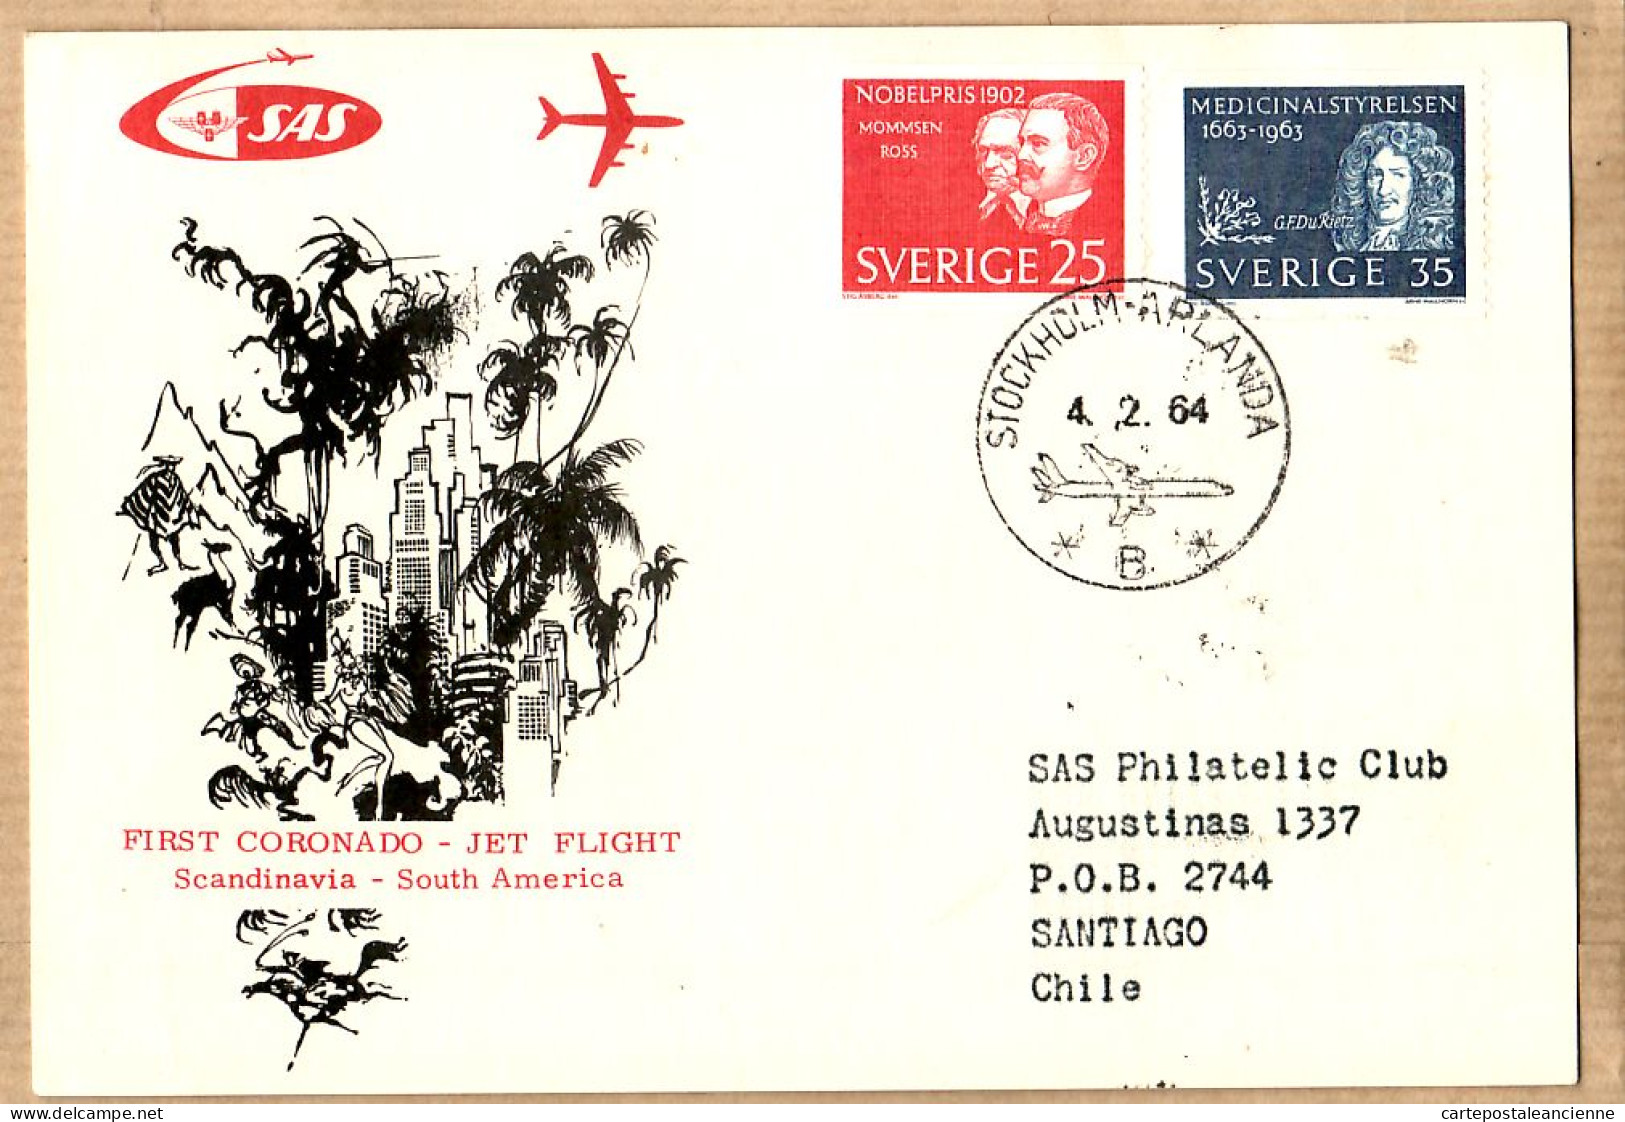 04532 / Sweden First SAS CORONADO Jet Flight Scandinavia SOUTH-AMERICA 04-02-1964 STOCKHOLM ARLANDA SANTIAGO CHILE Cpav - Covers & Documents